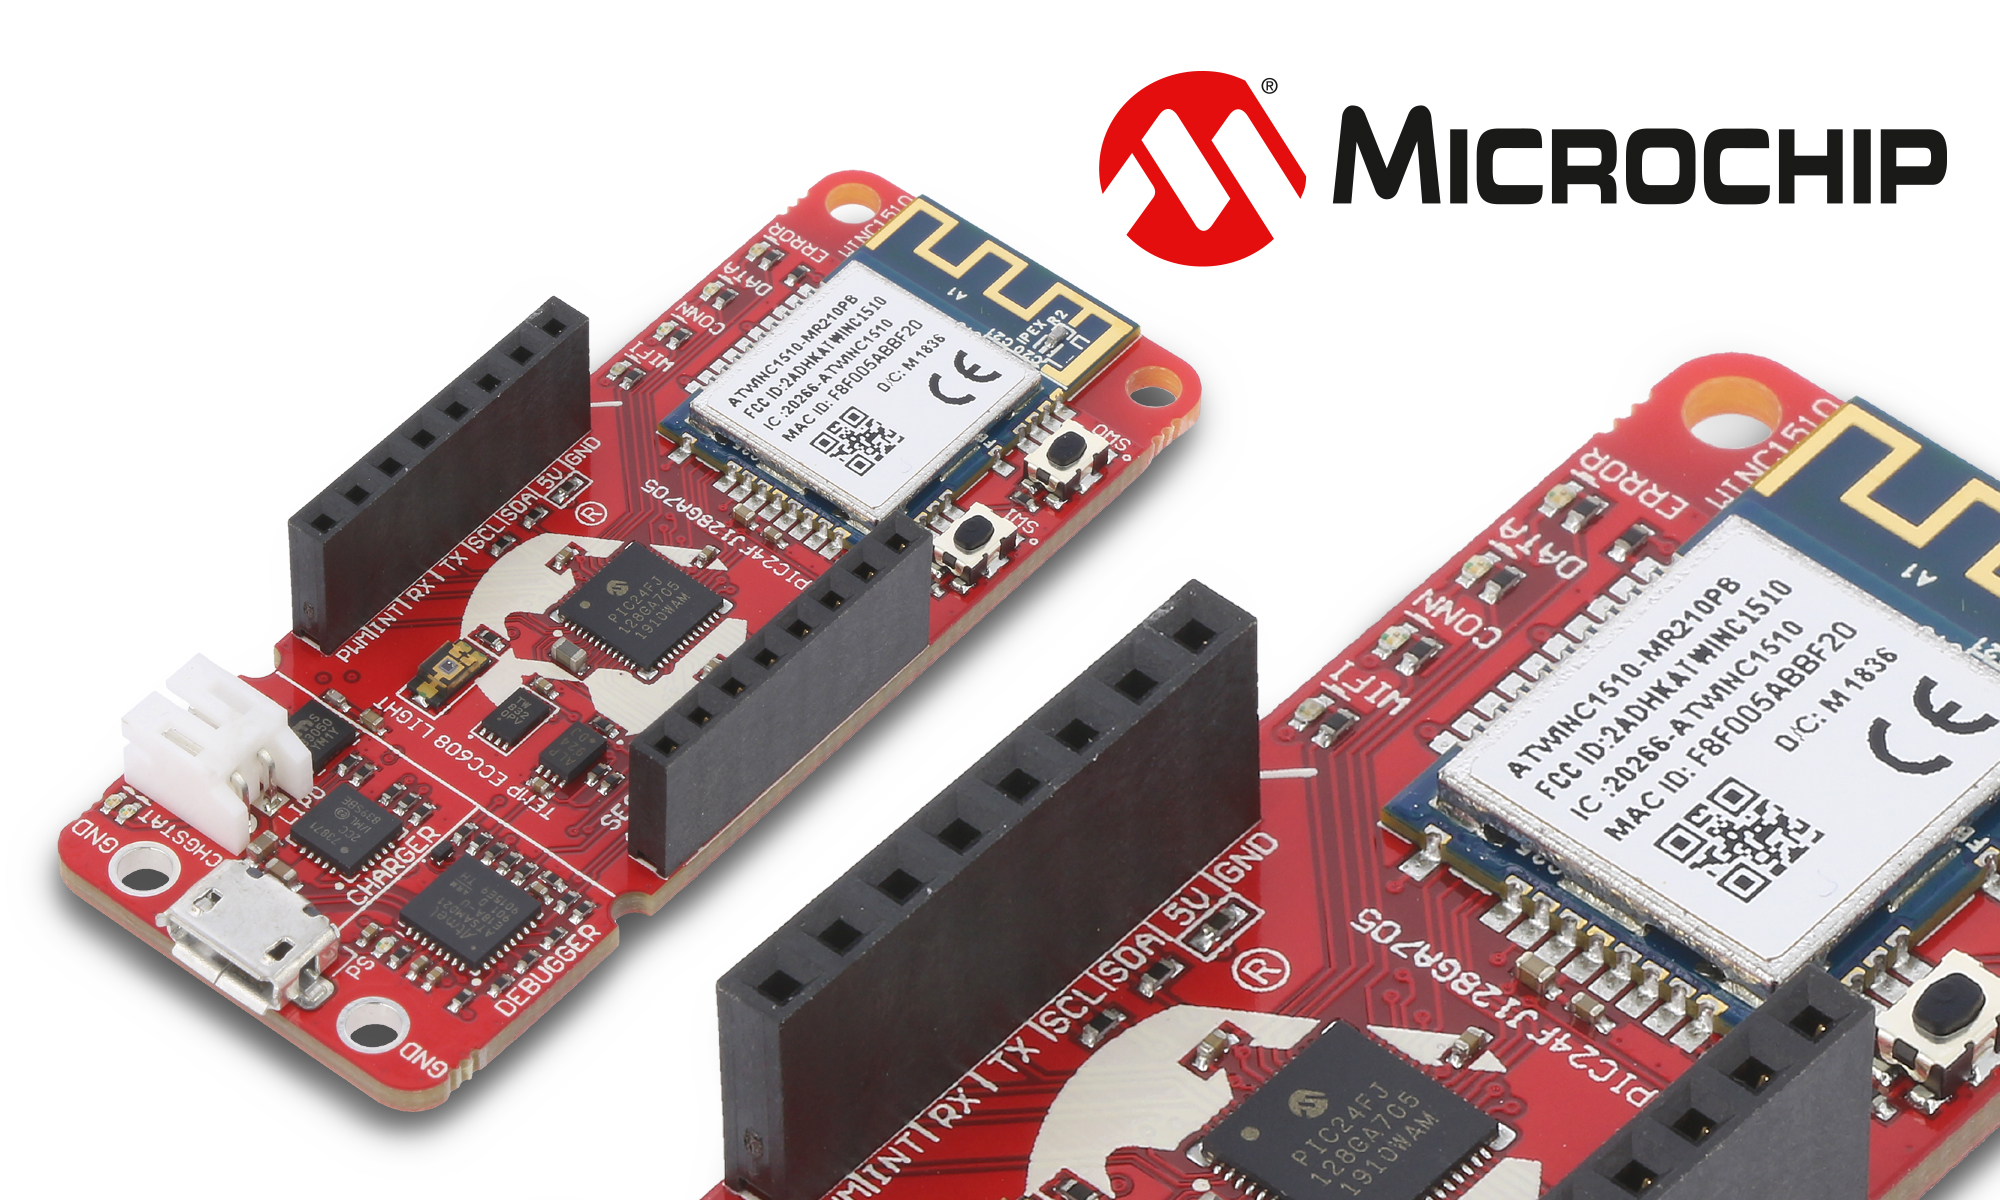 Microchip IoT kit for AMAZON WEB SERVICES (AWS)